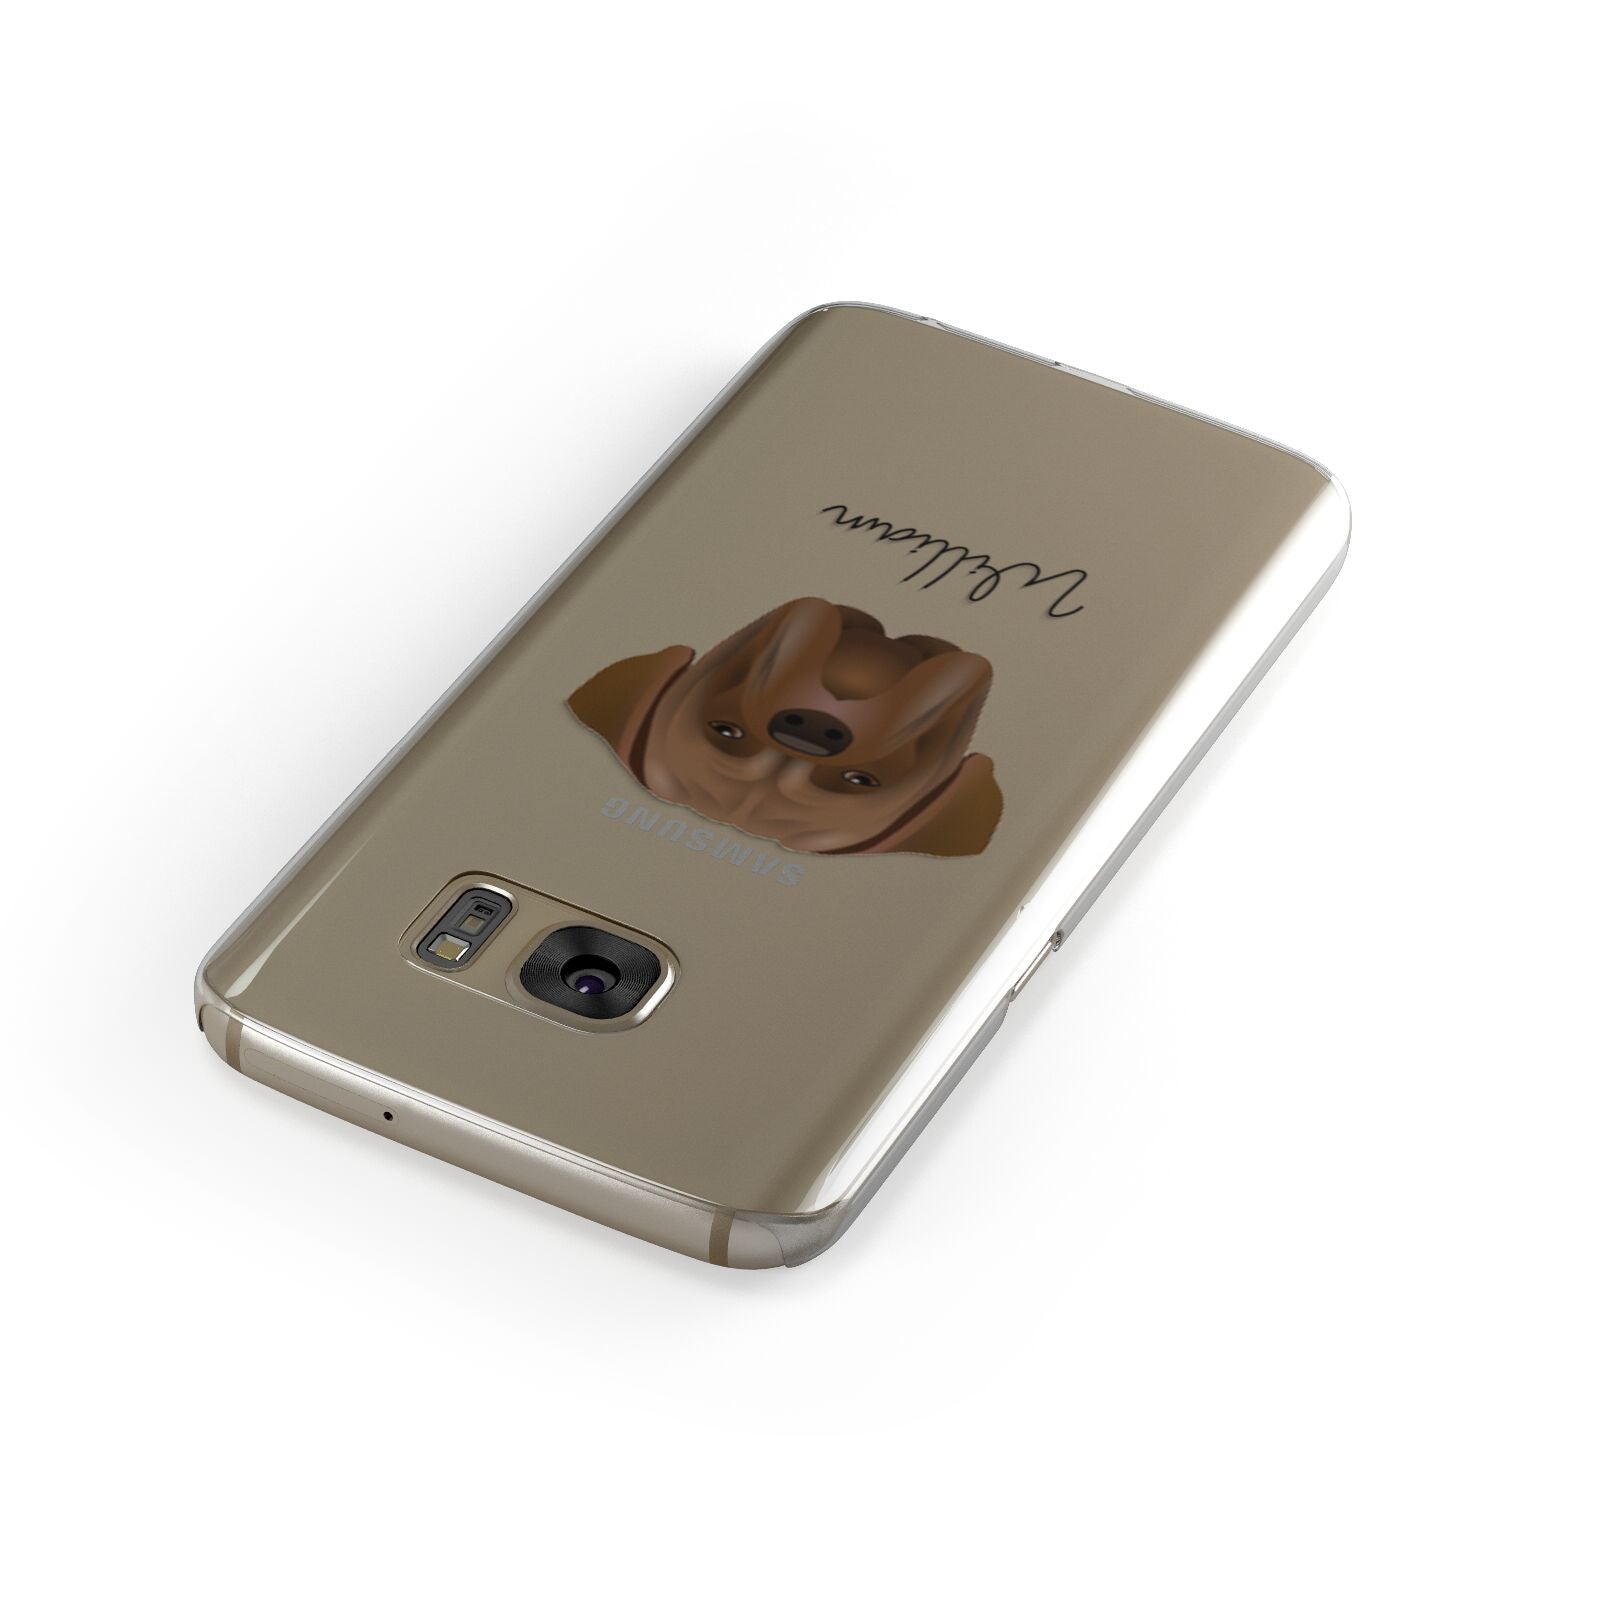 Dogue de Bordeaux Personalised Samsung Galaxy Case Front Close Up